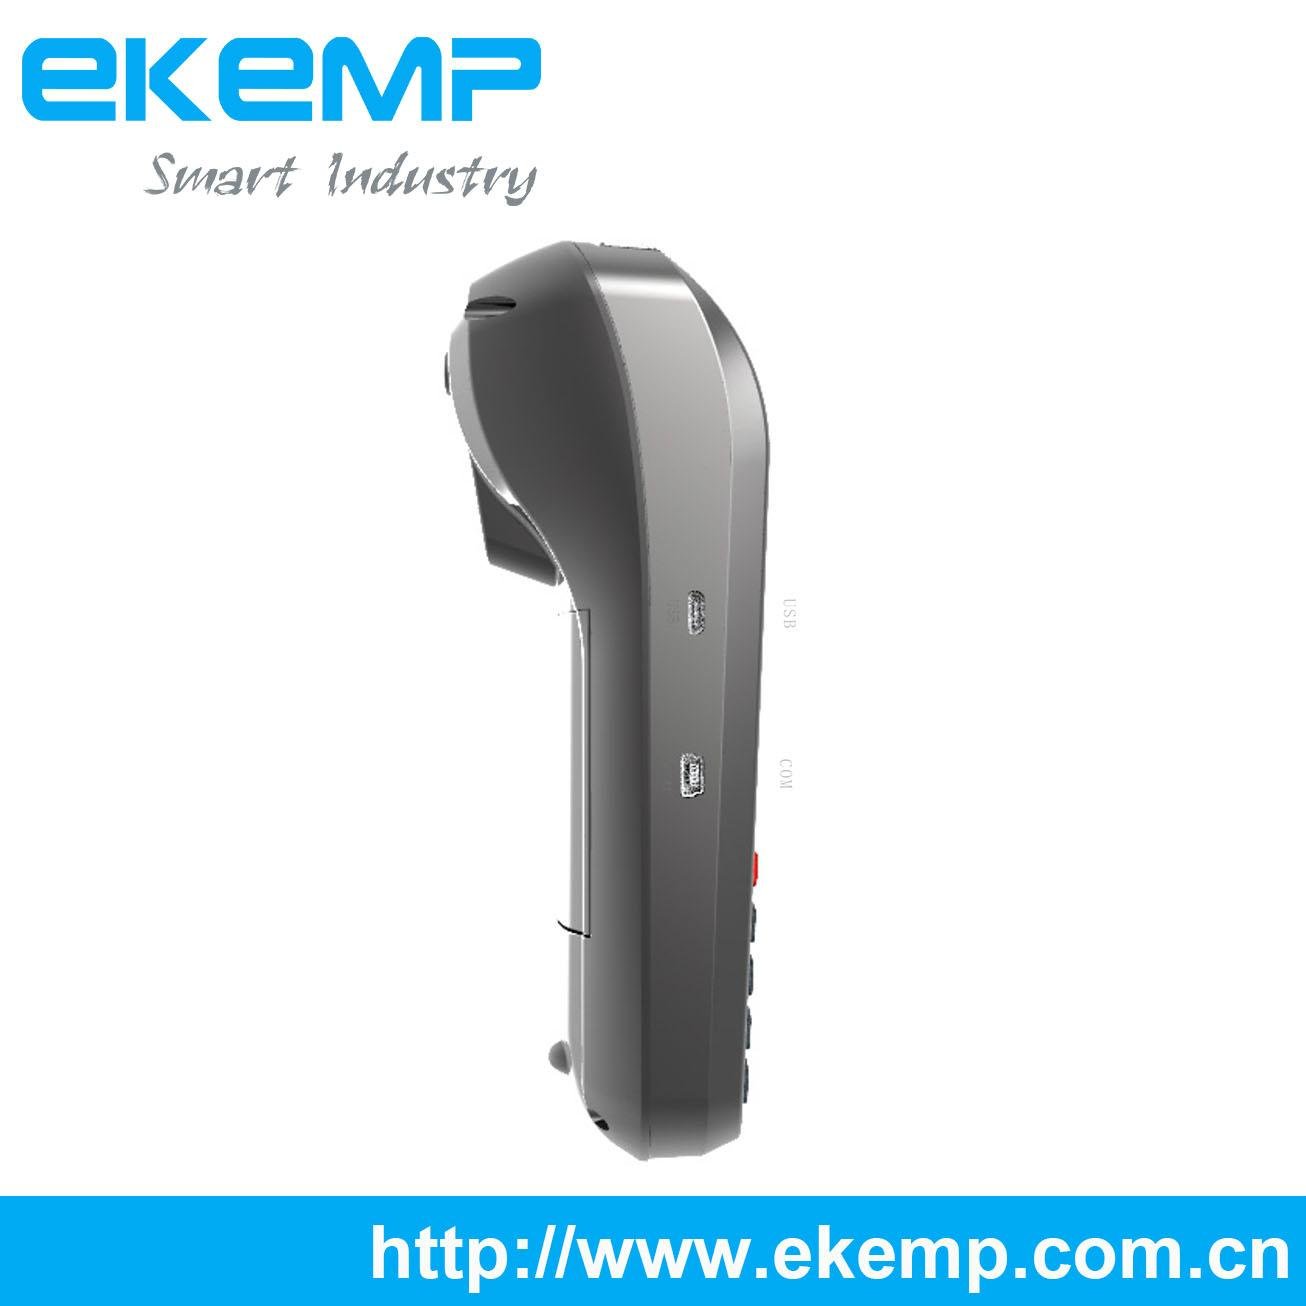 EKEMP Handheld POS Terminal with 3G,Magnetic Card Reader   2